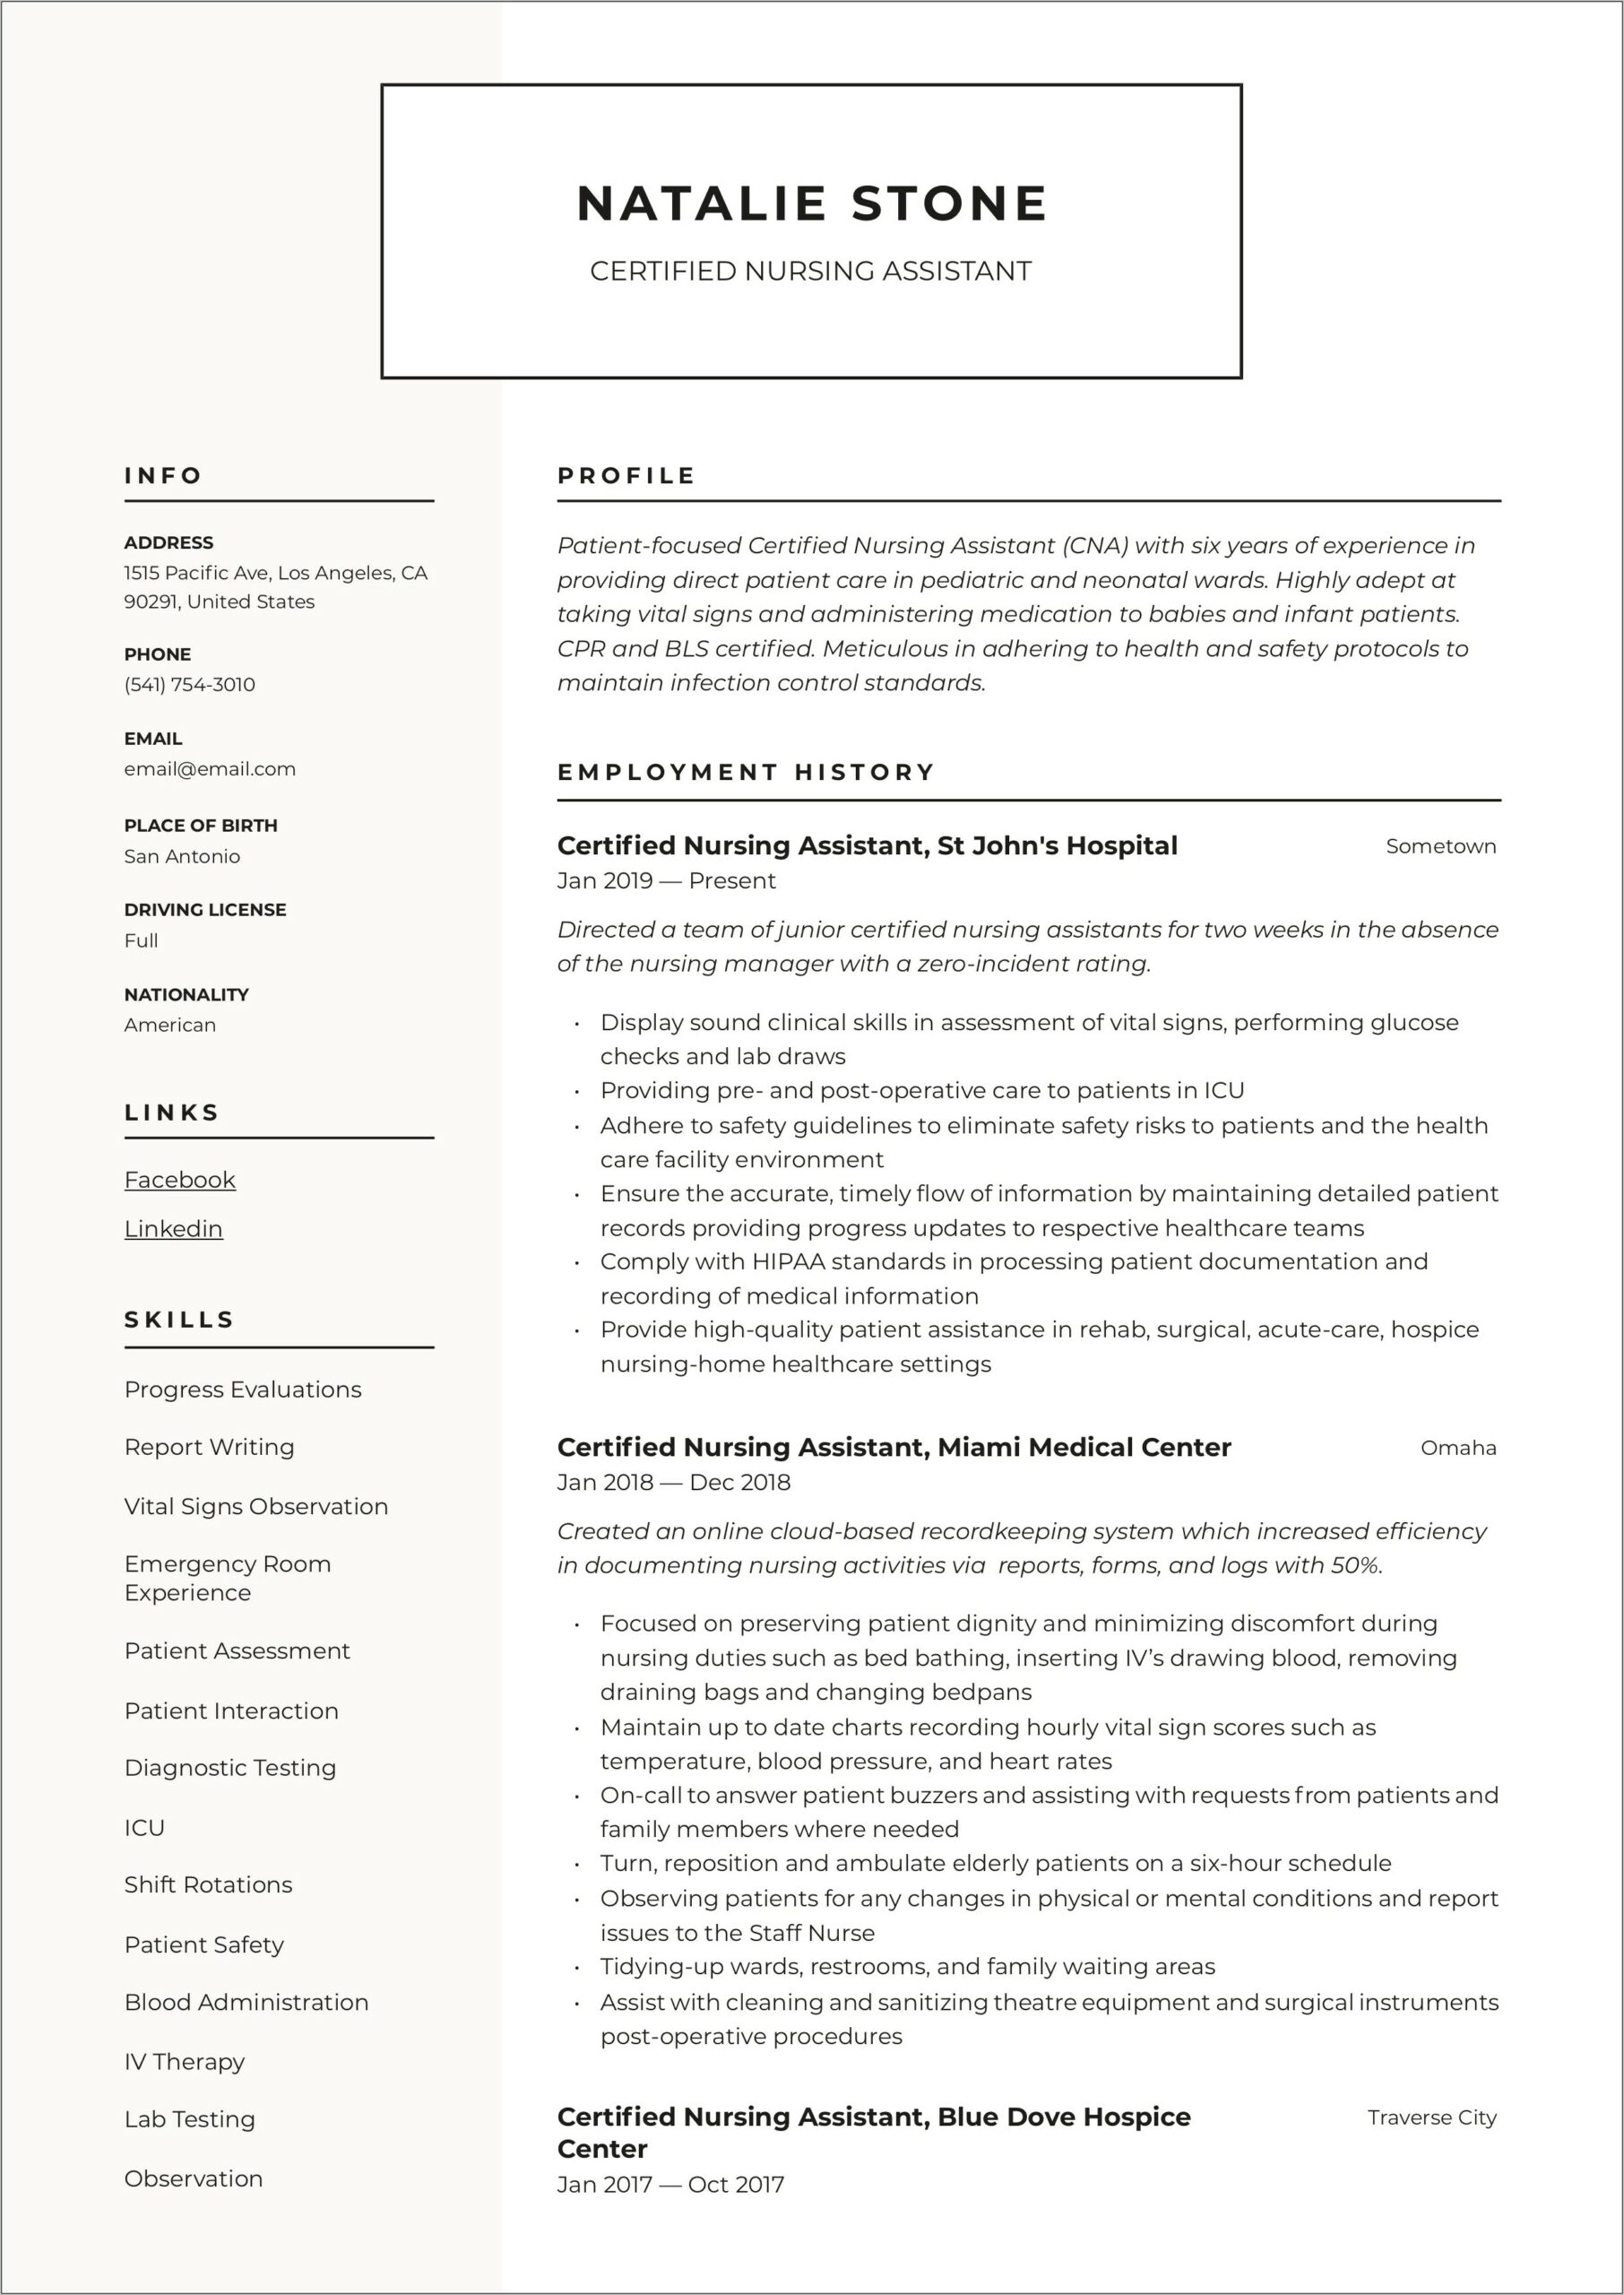 Cna Rehab Job Description For Resume